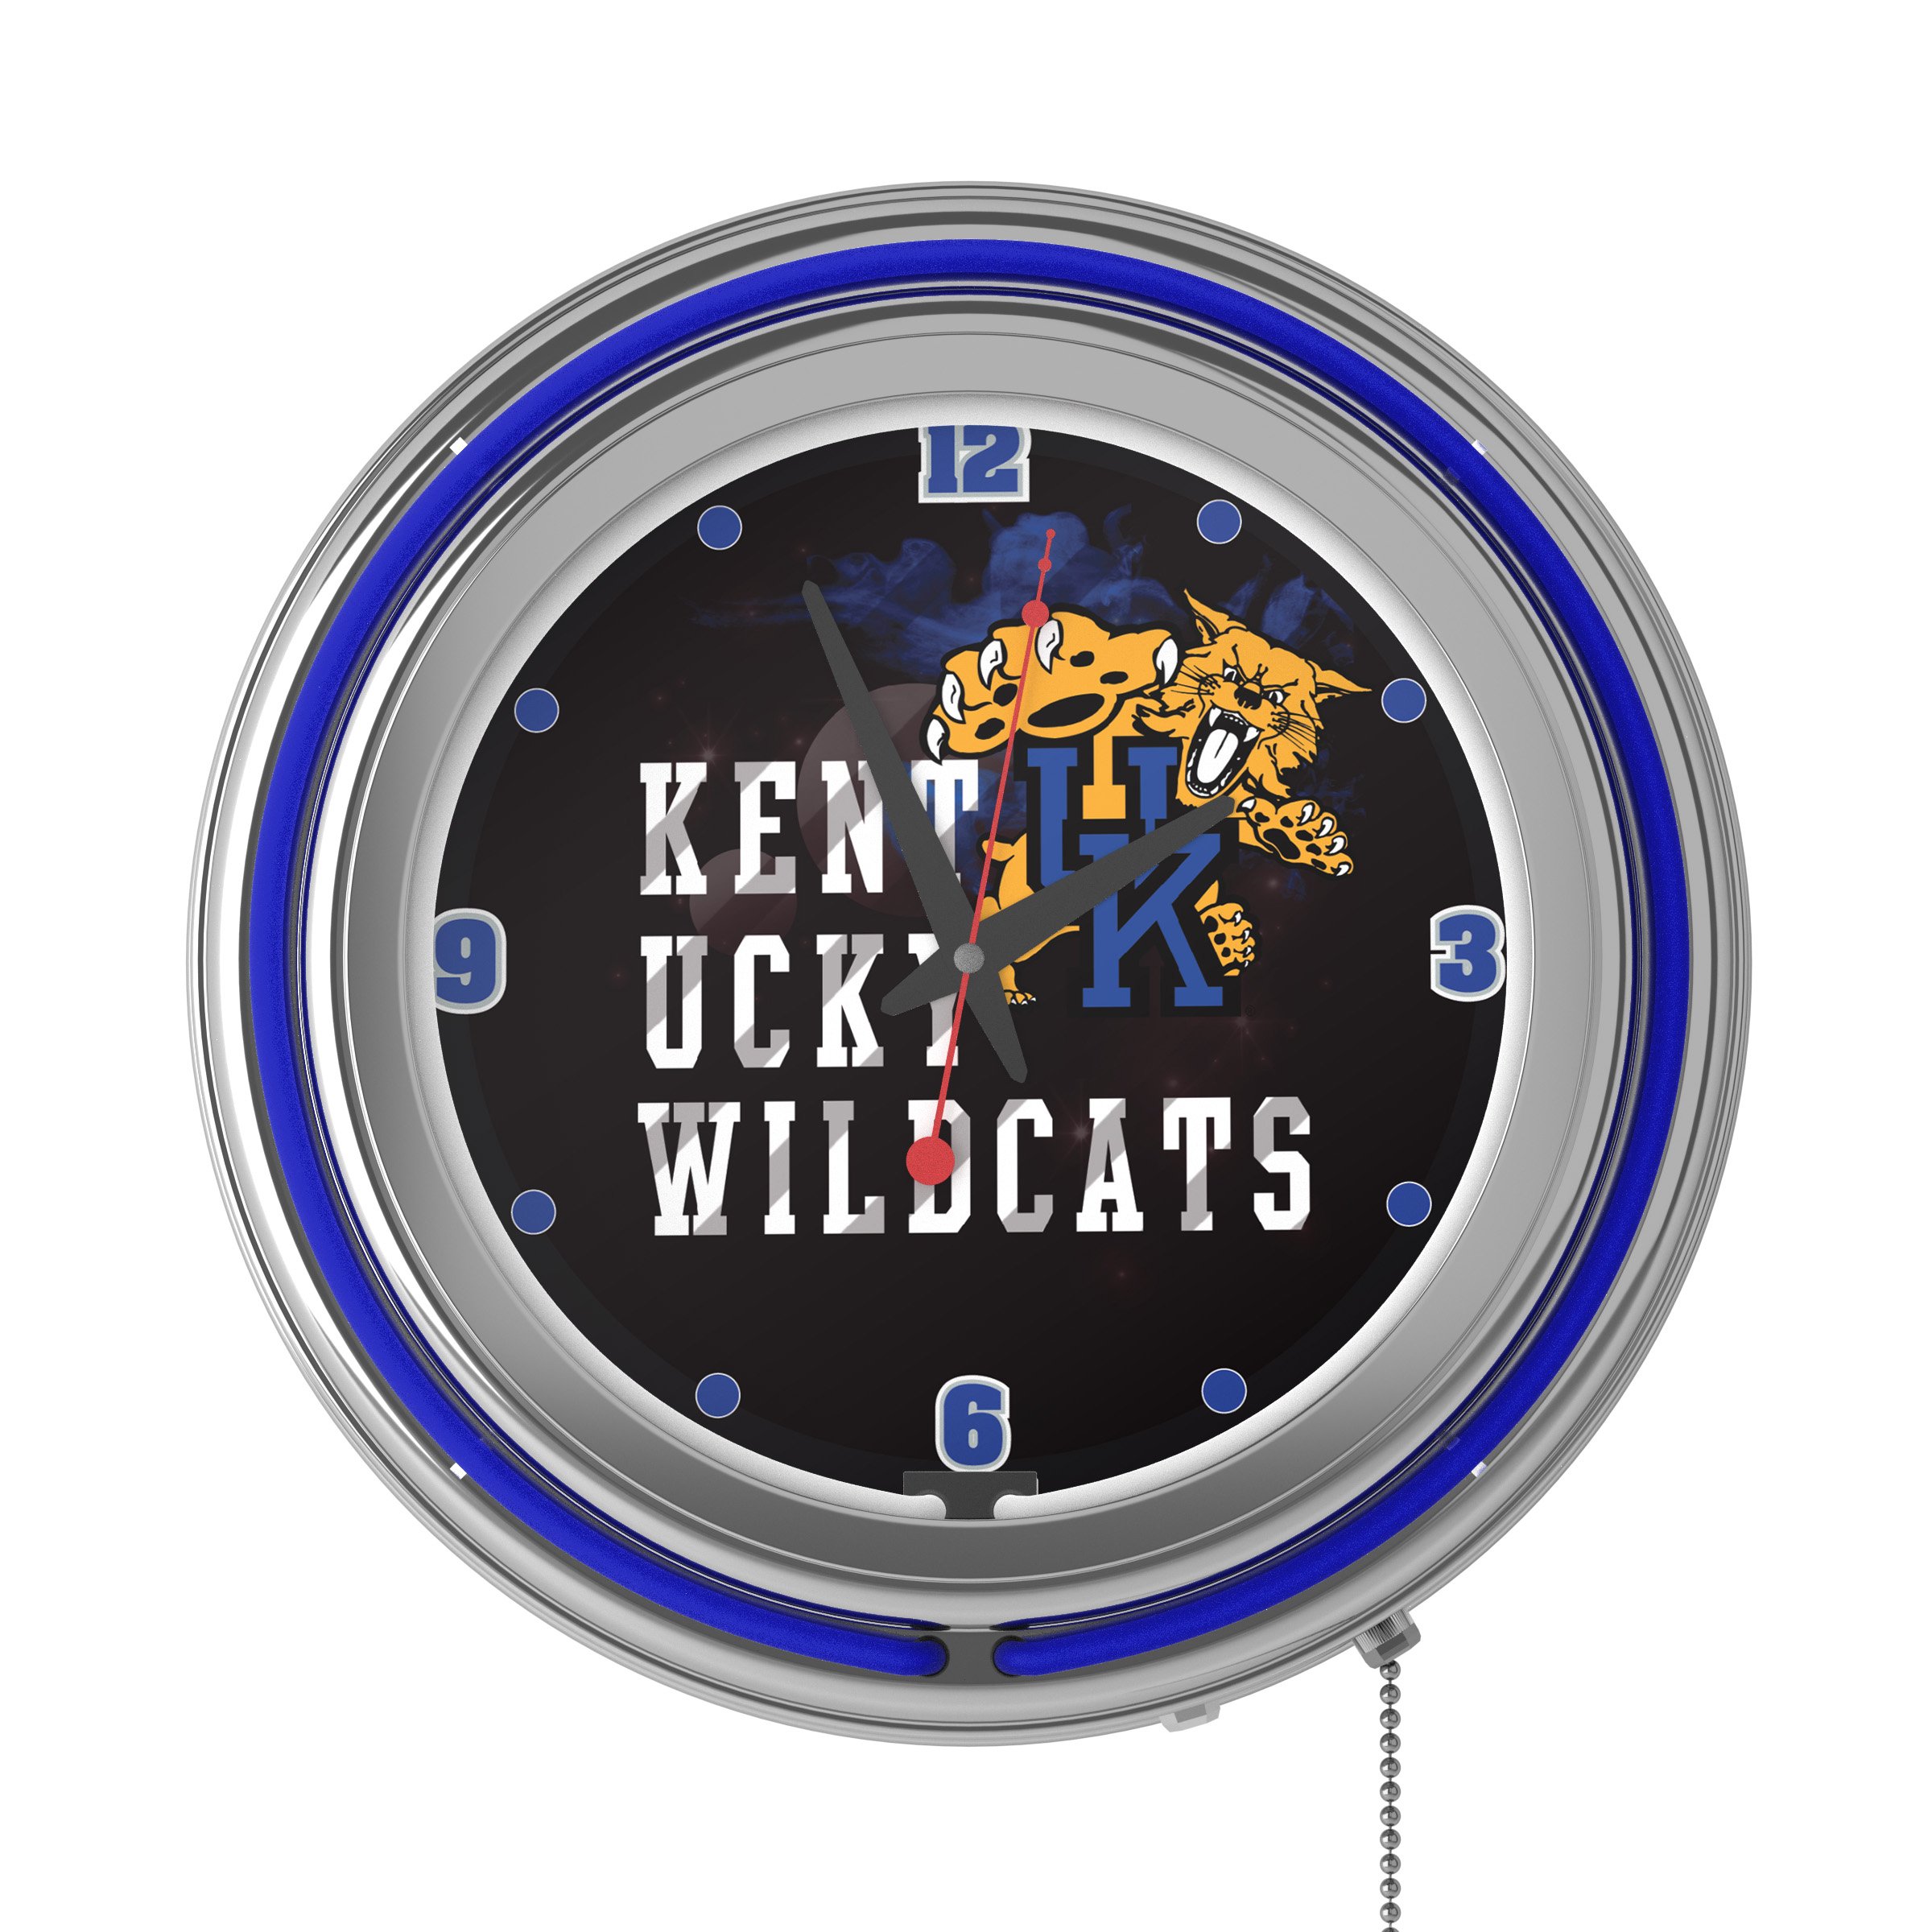 University of Kentucky Wildcats Chrome Double Rung Neon Clock - Smoke - image 2 of 6